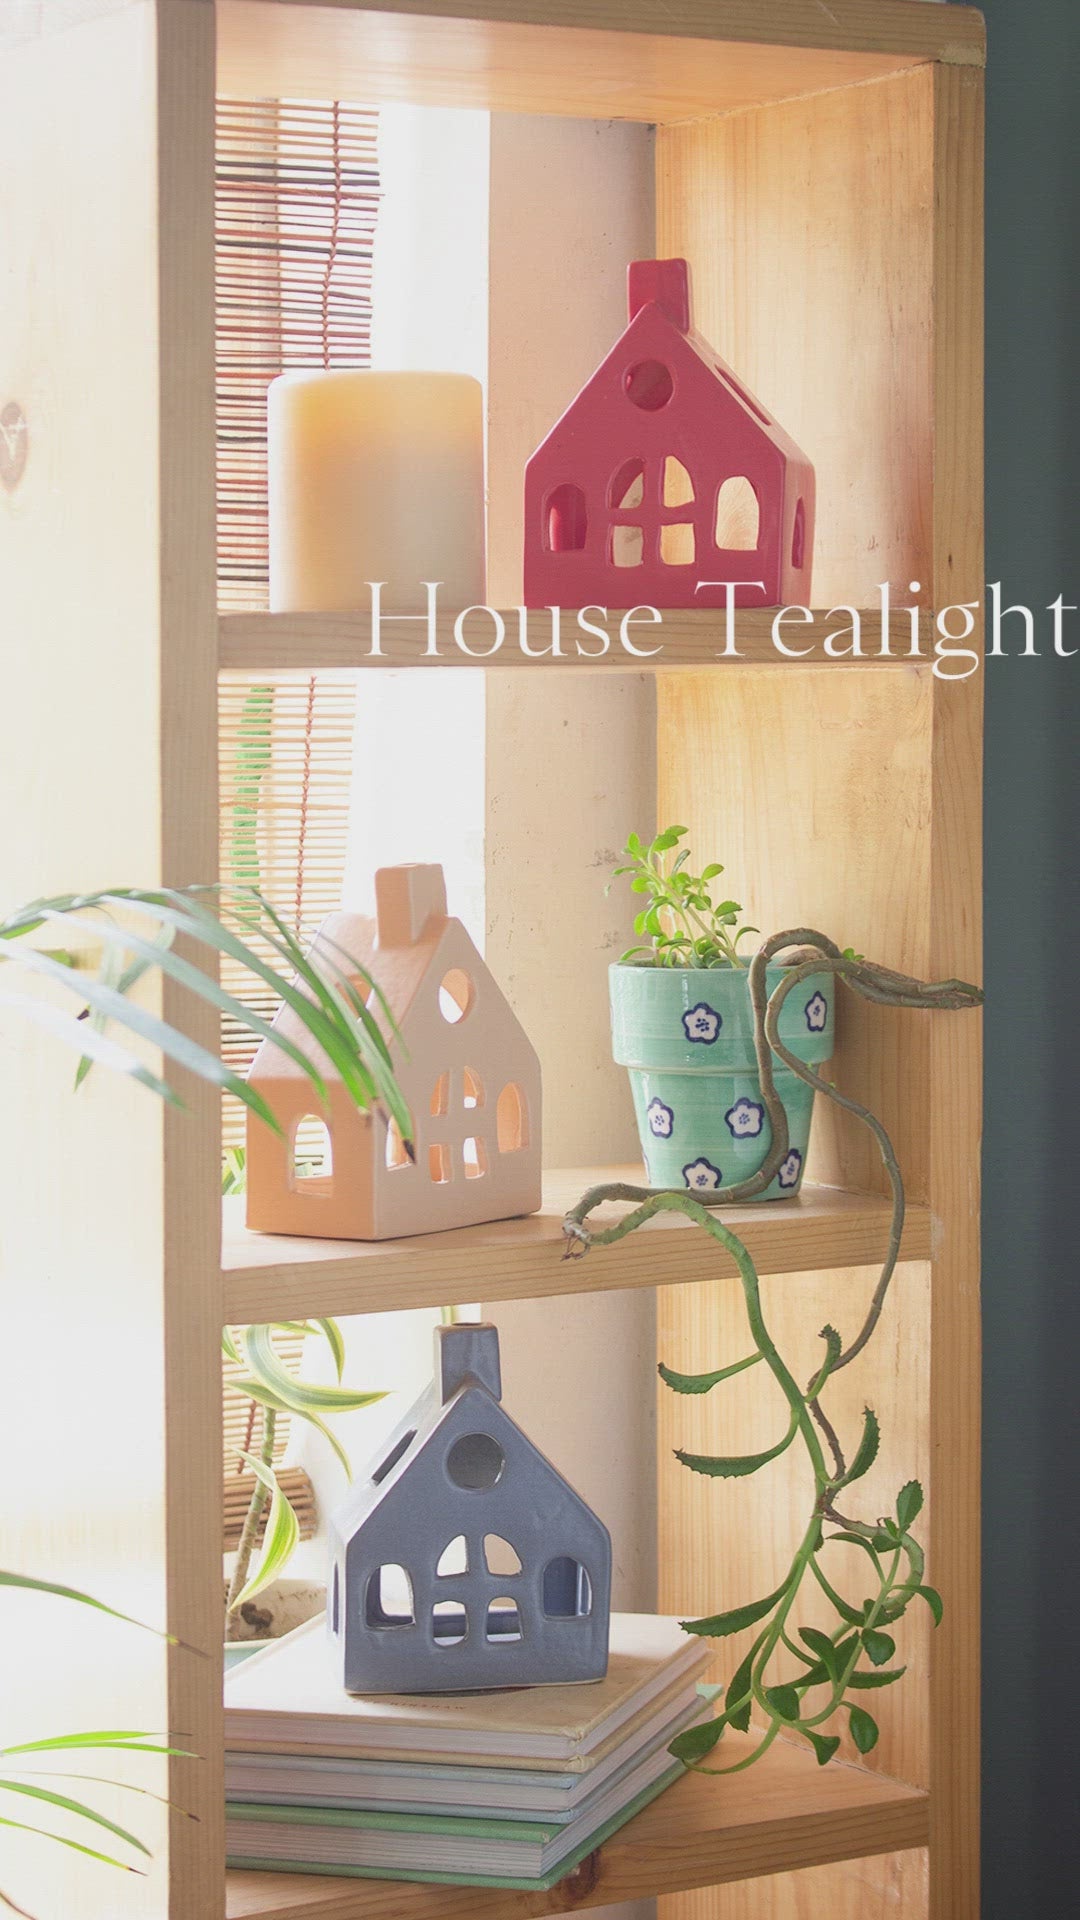 House Tealight